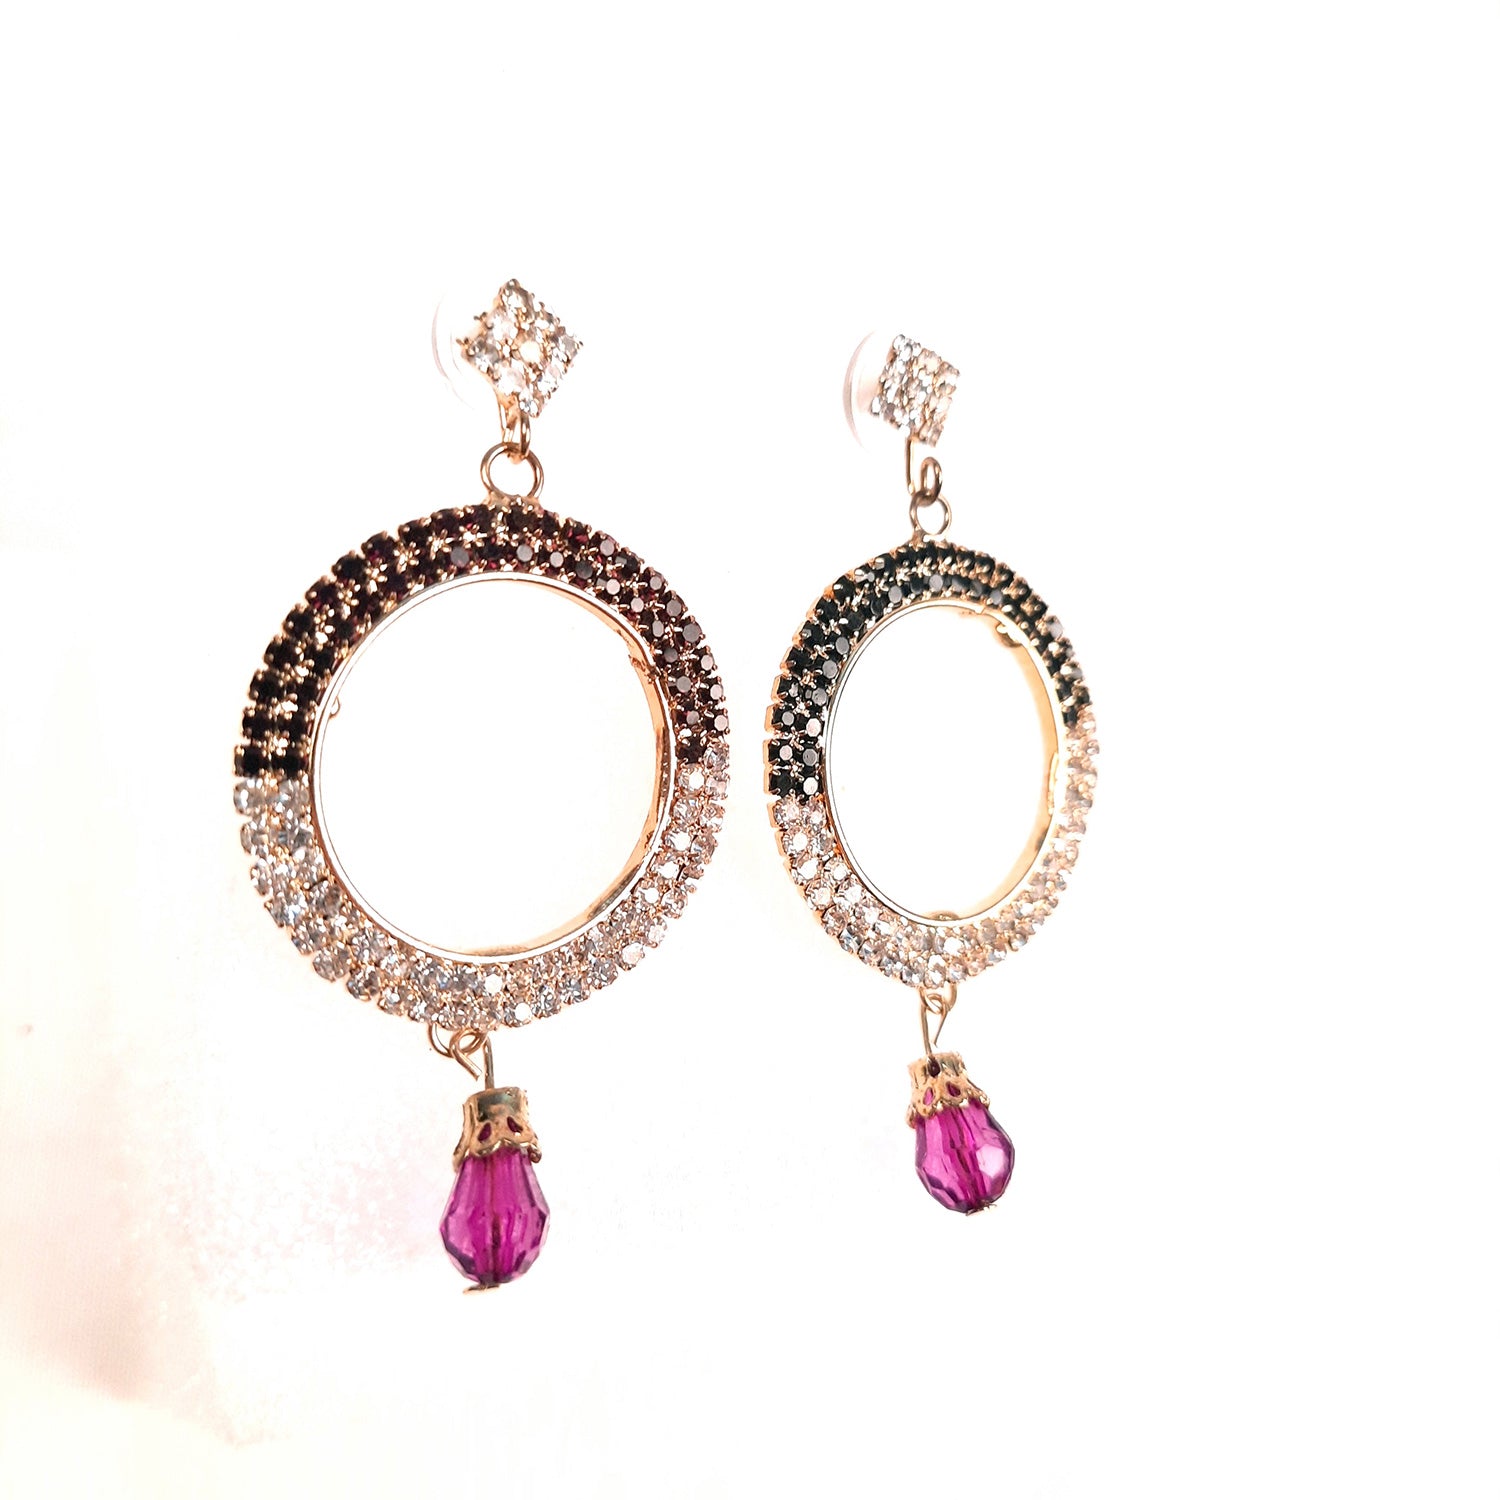 Earrings for Women & Girls | Earring Hoops - Stylish Crystal Earrings | Stylish Fashion Jewellery | Gift for Her, Friendship Day, Valentine's Day Gift - Apkamart